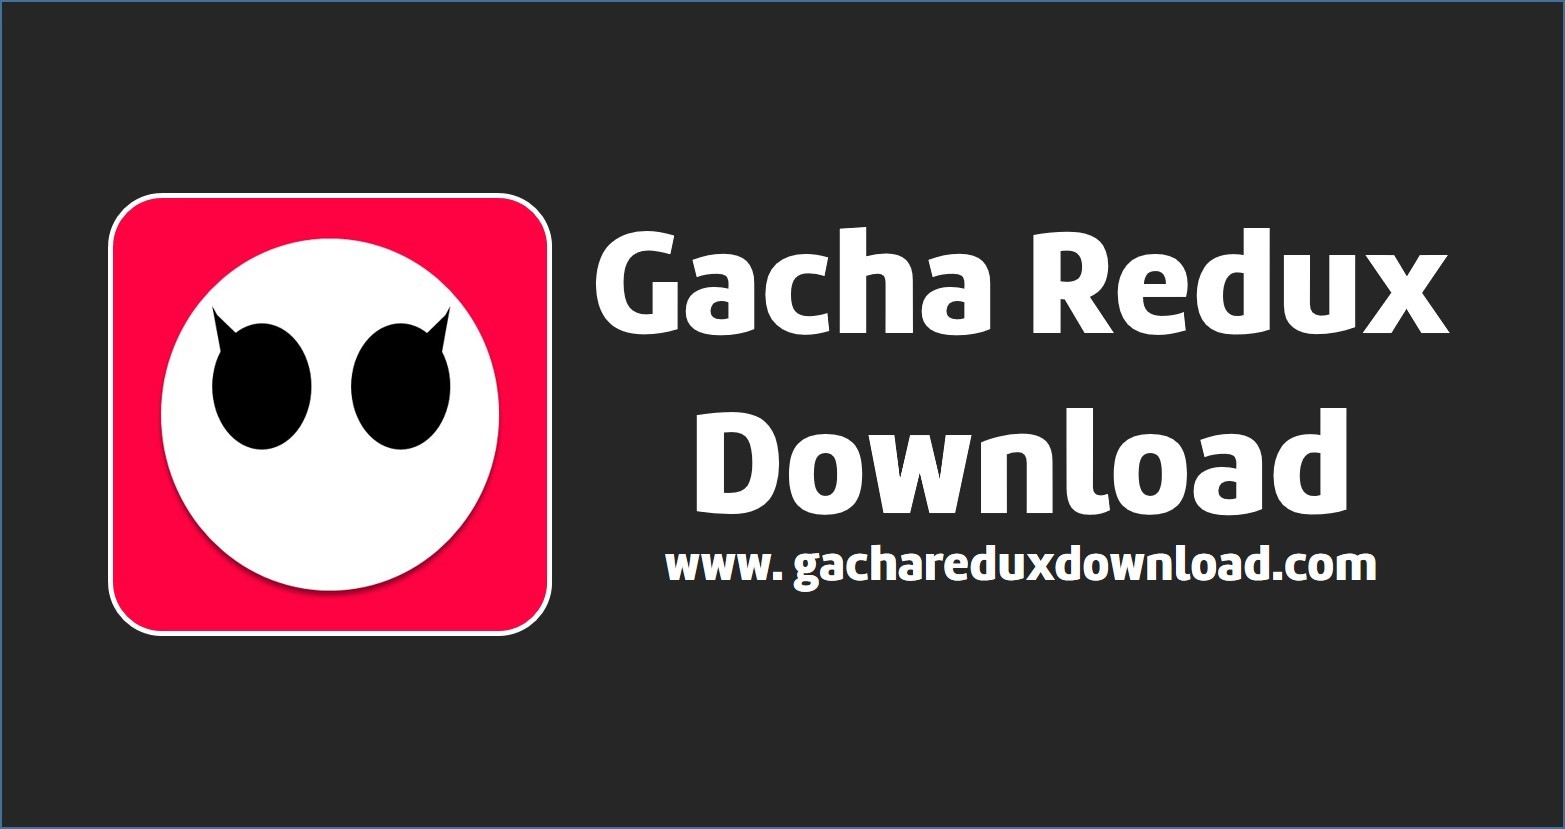 gacha redux download